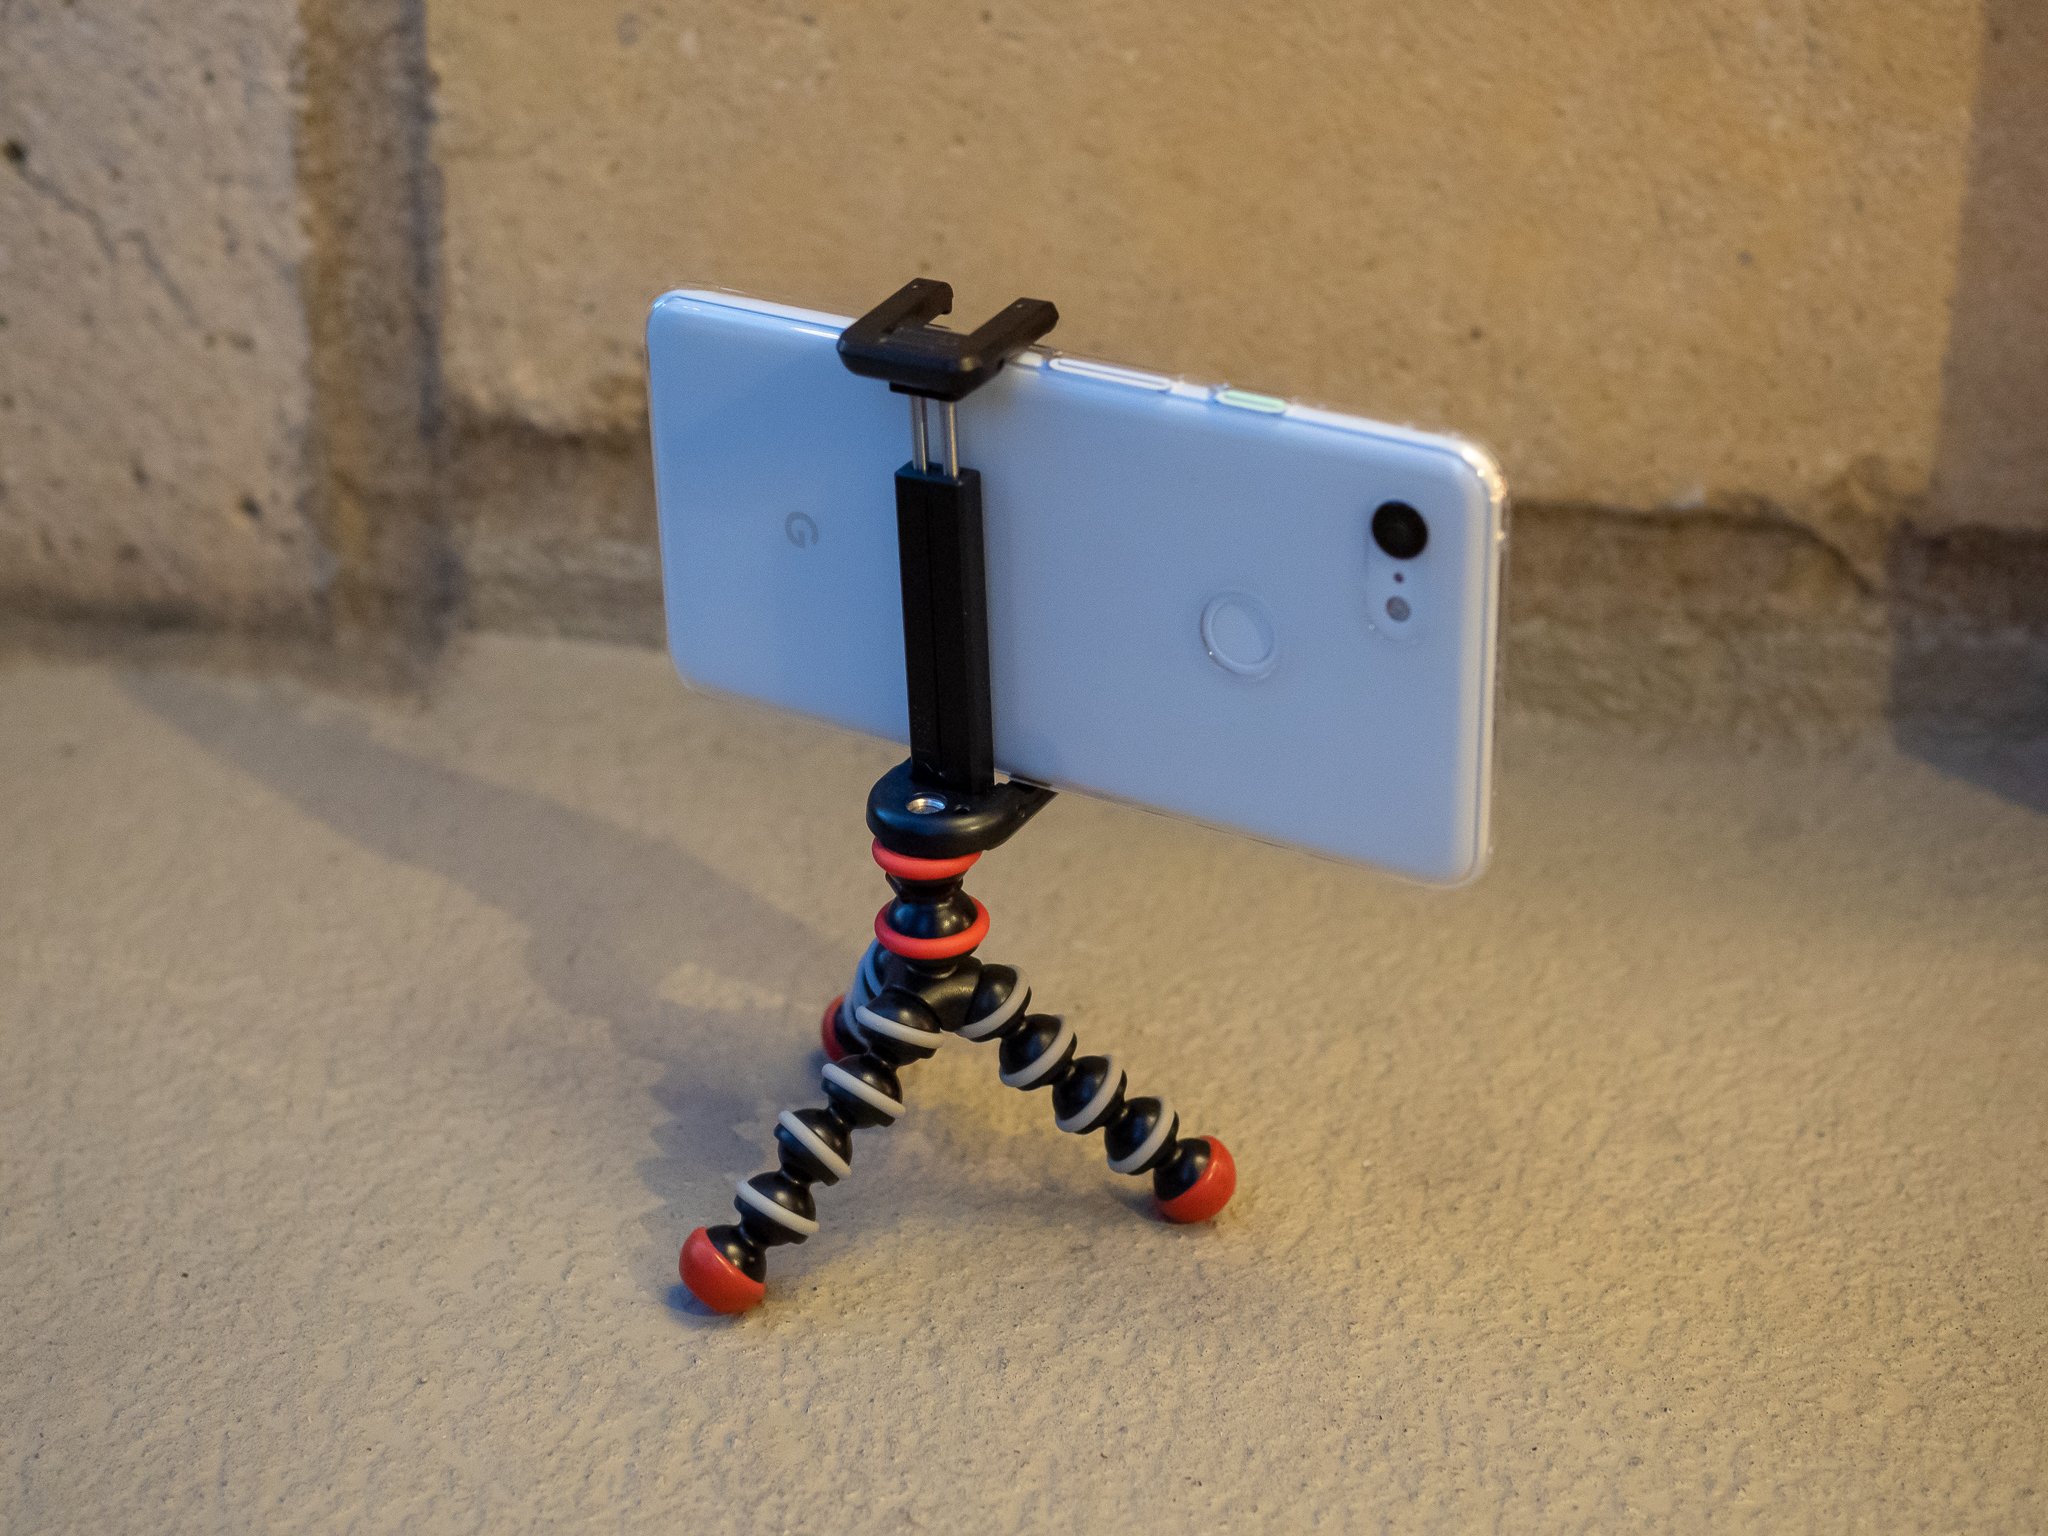 Google Pixel 3 XL on a tripod